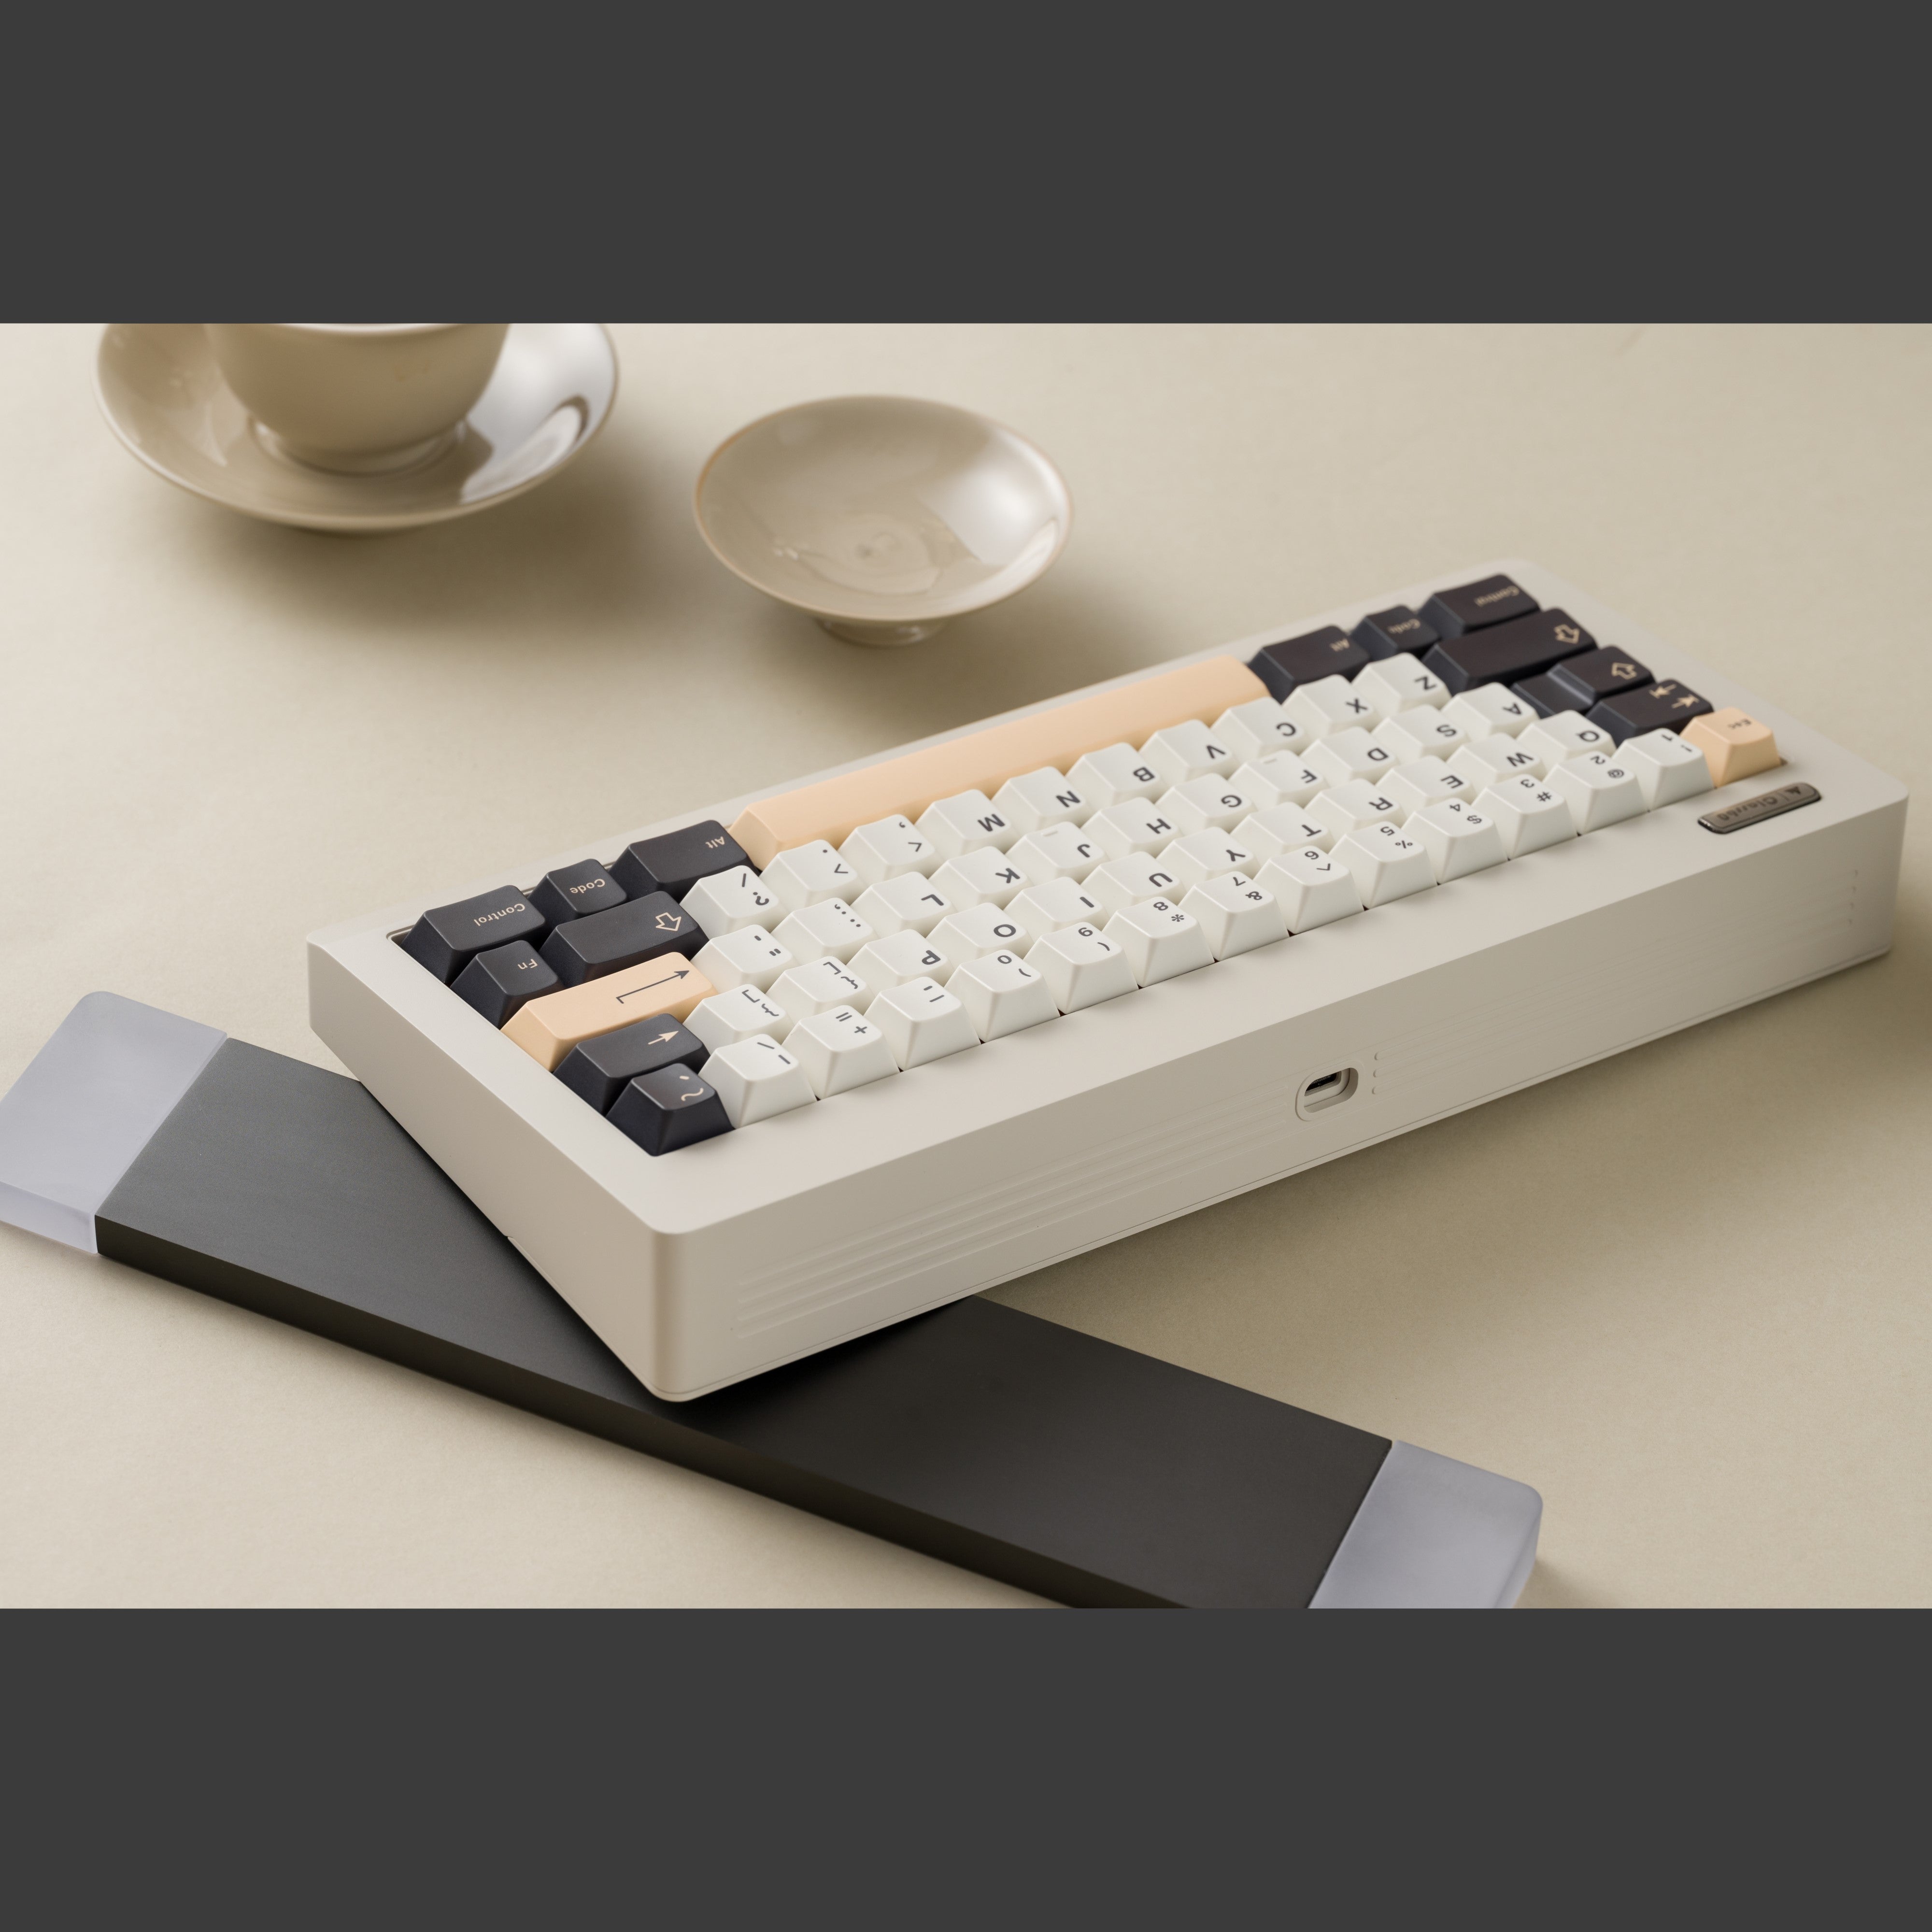 MM-Class60 Retro Keyboard Kit